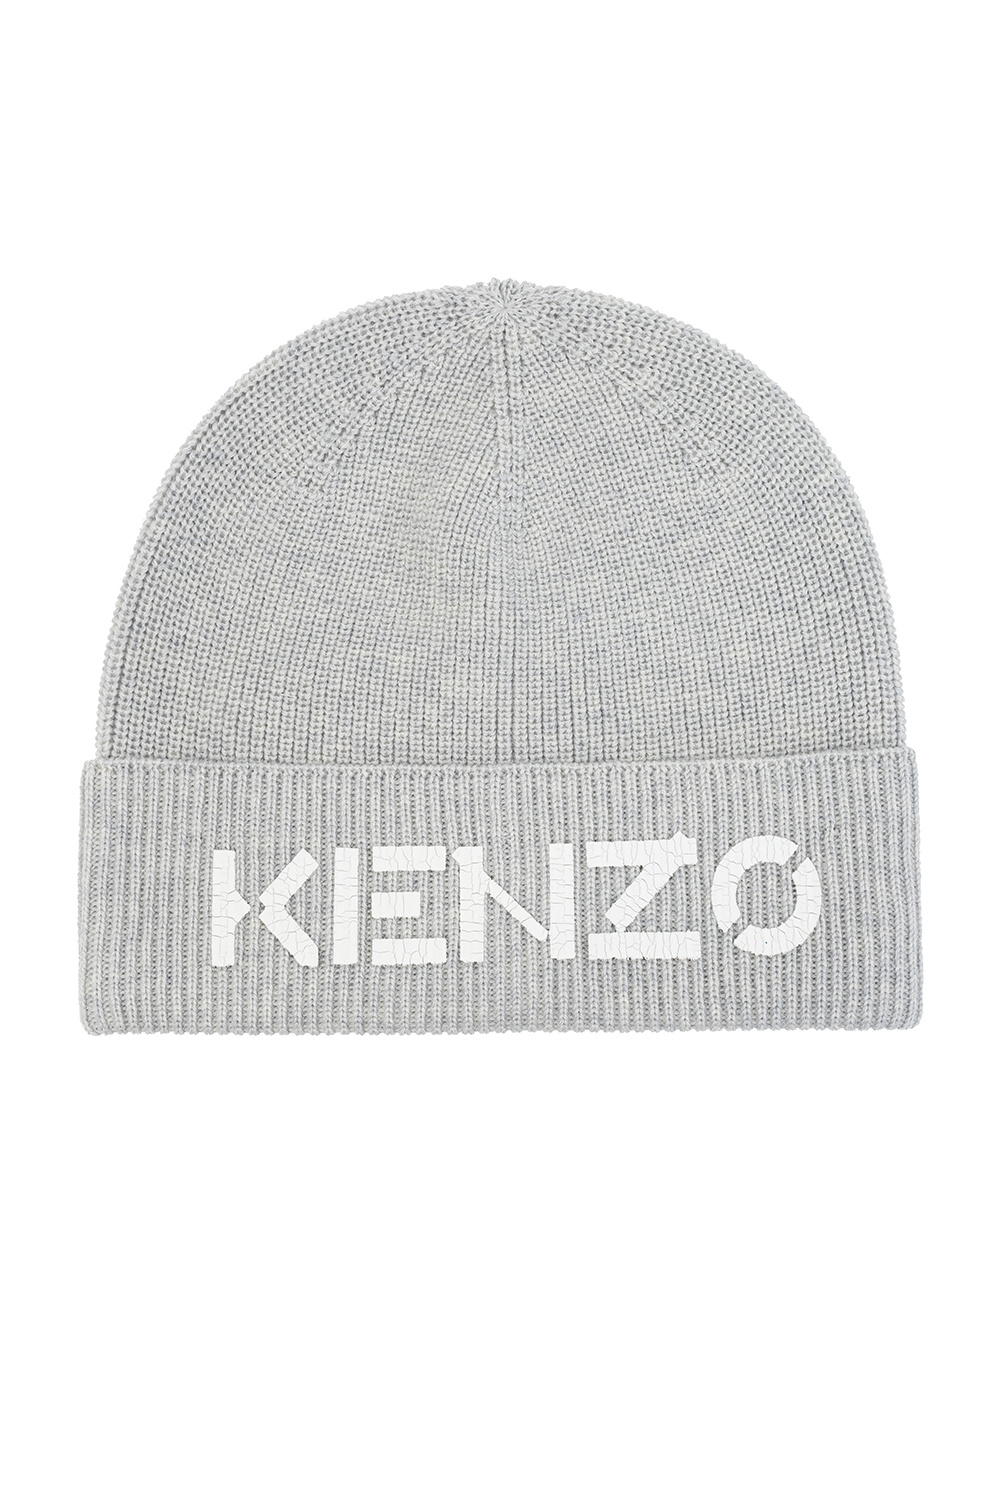 Kenzo Wool Ariat hat